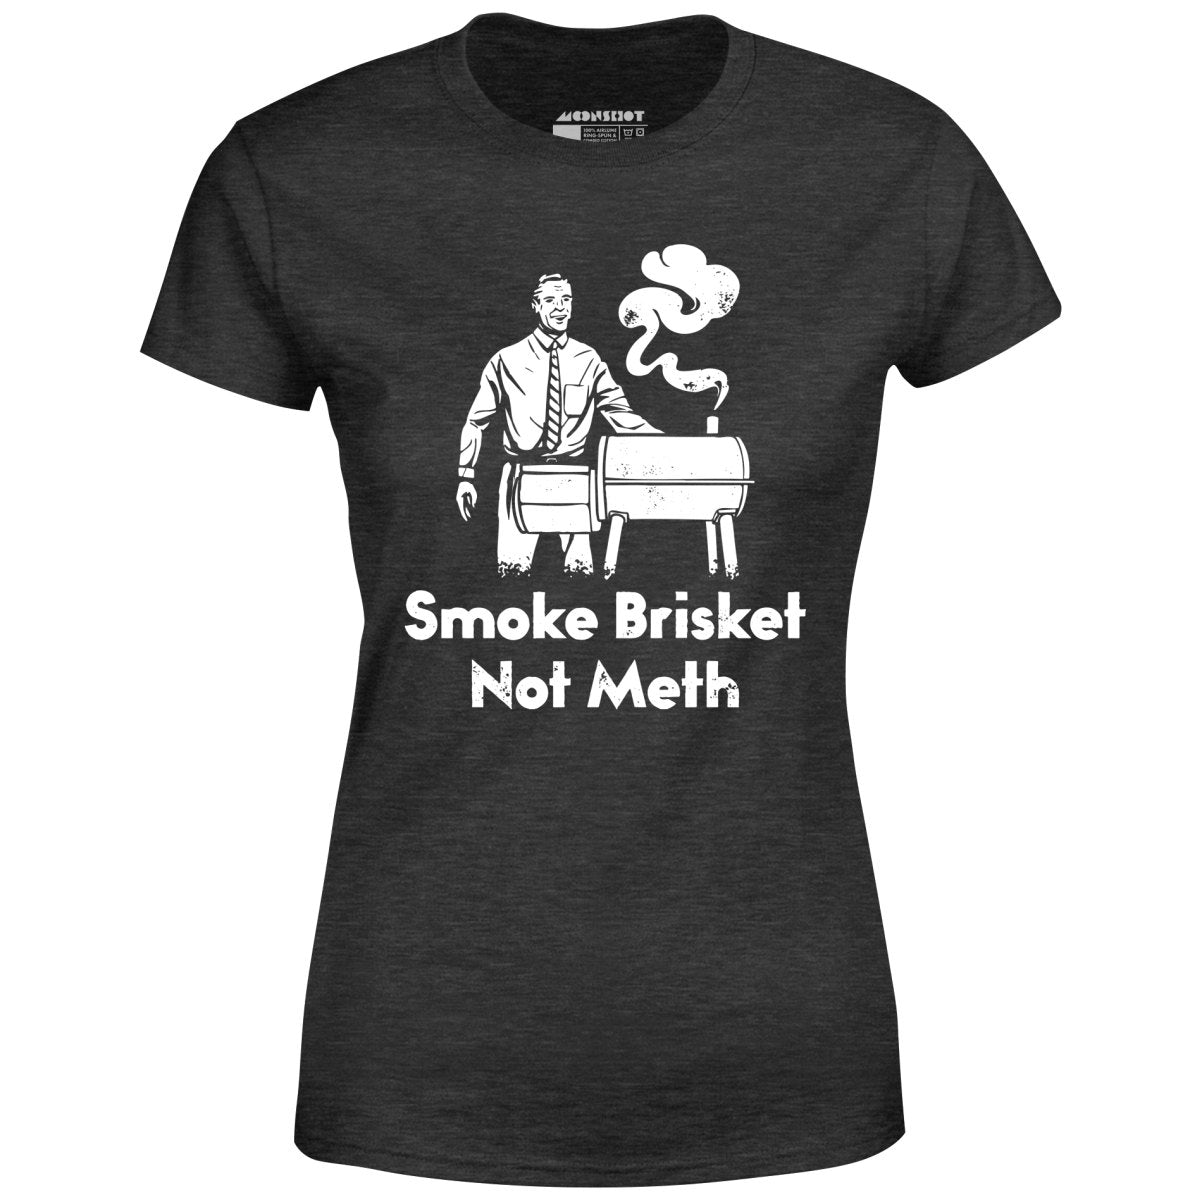 Smoke Brisket Not Meth - Women's T-Shirt